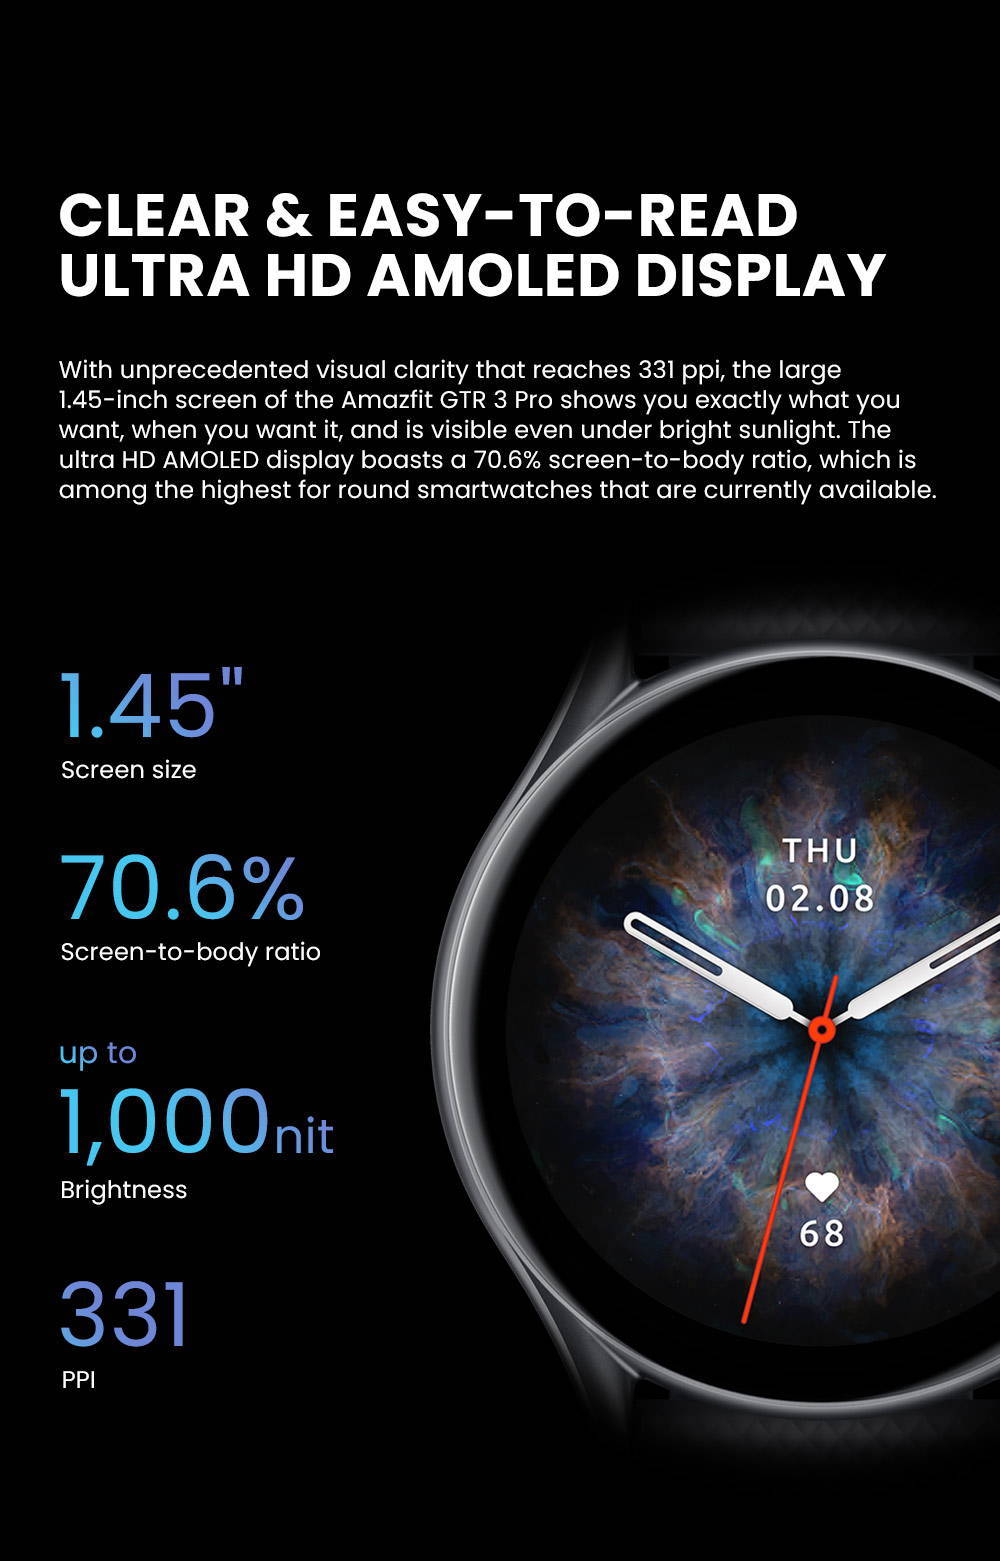 New Amazfit GTR 3 Pro GTR3 Pro GTR-3 Pro Smartwatch AMOLED Display Zepp OS  App 12-day Battery Life Watch for Andriod - AliExpress